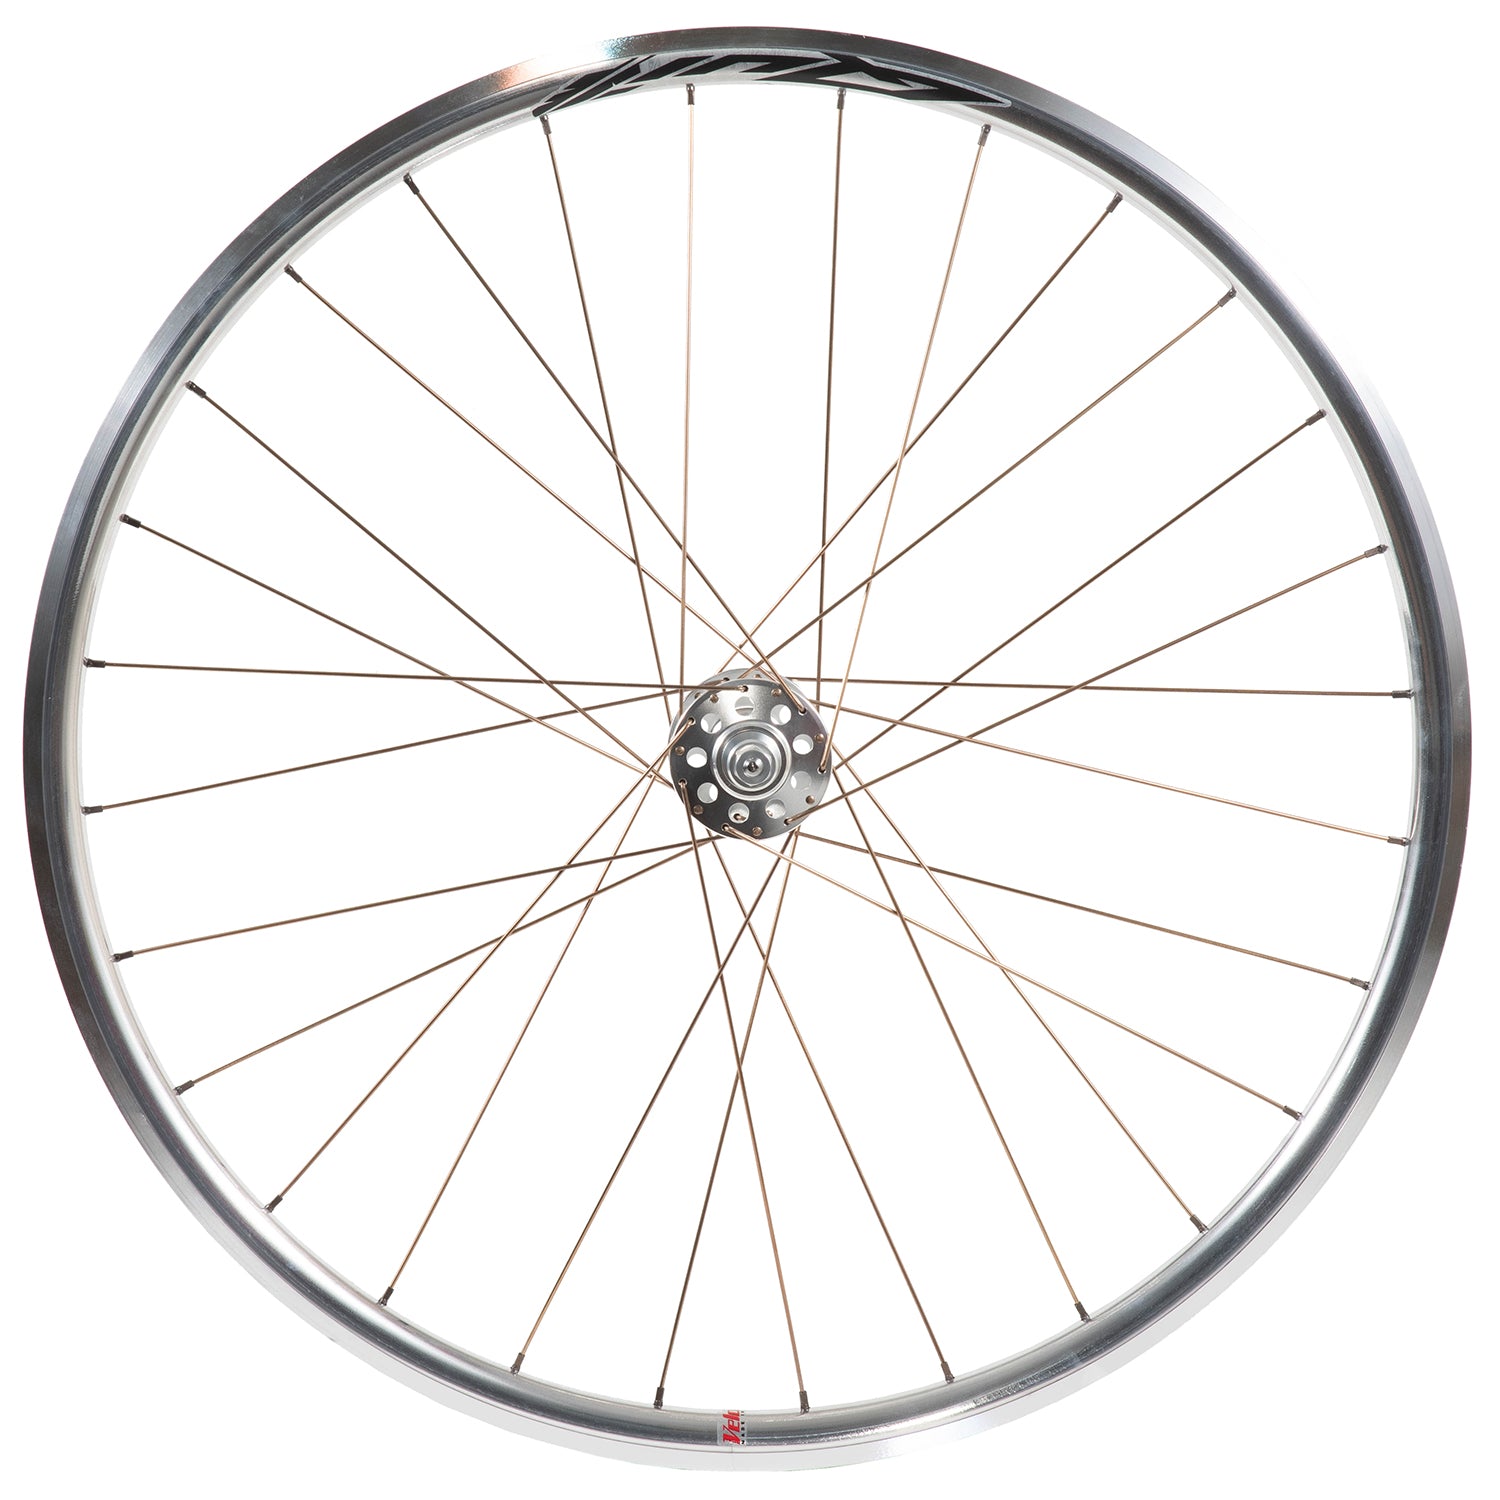 GORILLA SPUN Build Wheel [VELOCITY Quill x CYCROC Large Flange Polish]